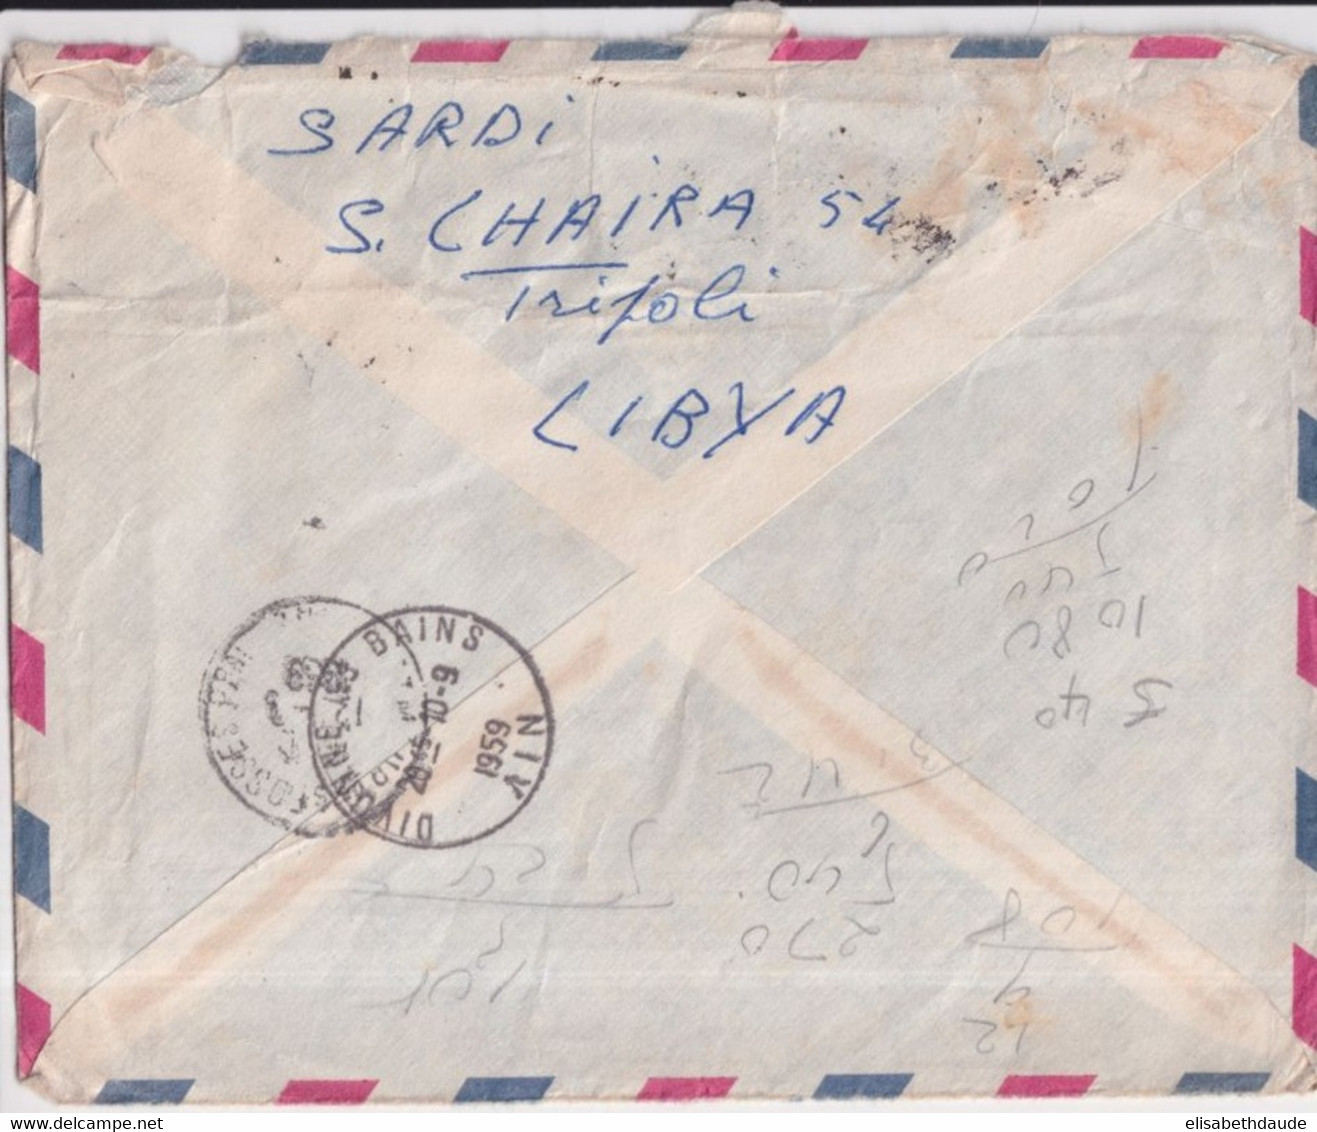 1959 - LIBYE - ENVELOPPE AIRMAIL De TRIPOLI => DAKAR (SENEGAL) => DIVONNE (AIN) => ST MAUR (SEINE) => GIMONT (GERS) !! - Libyen